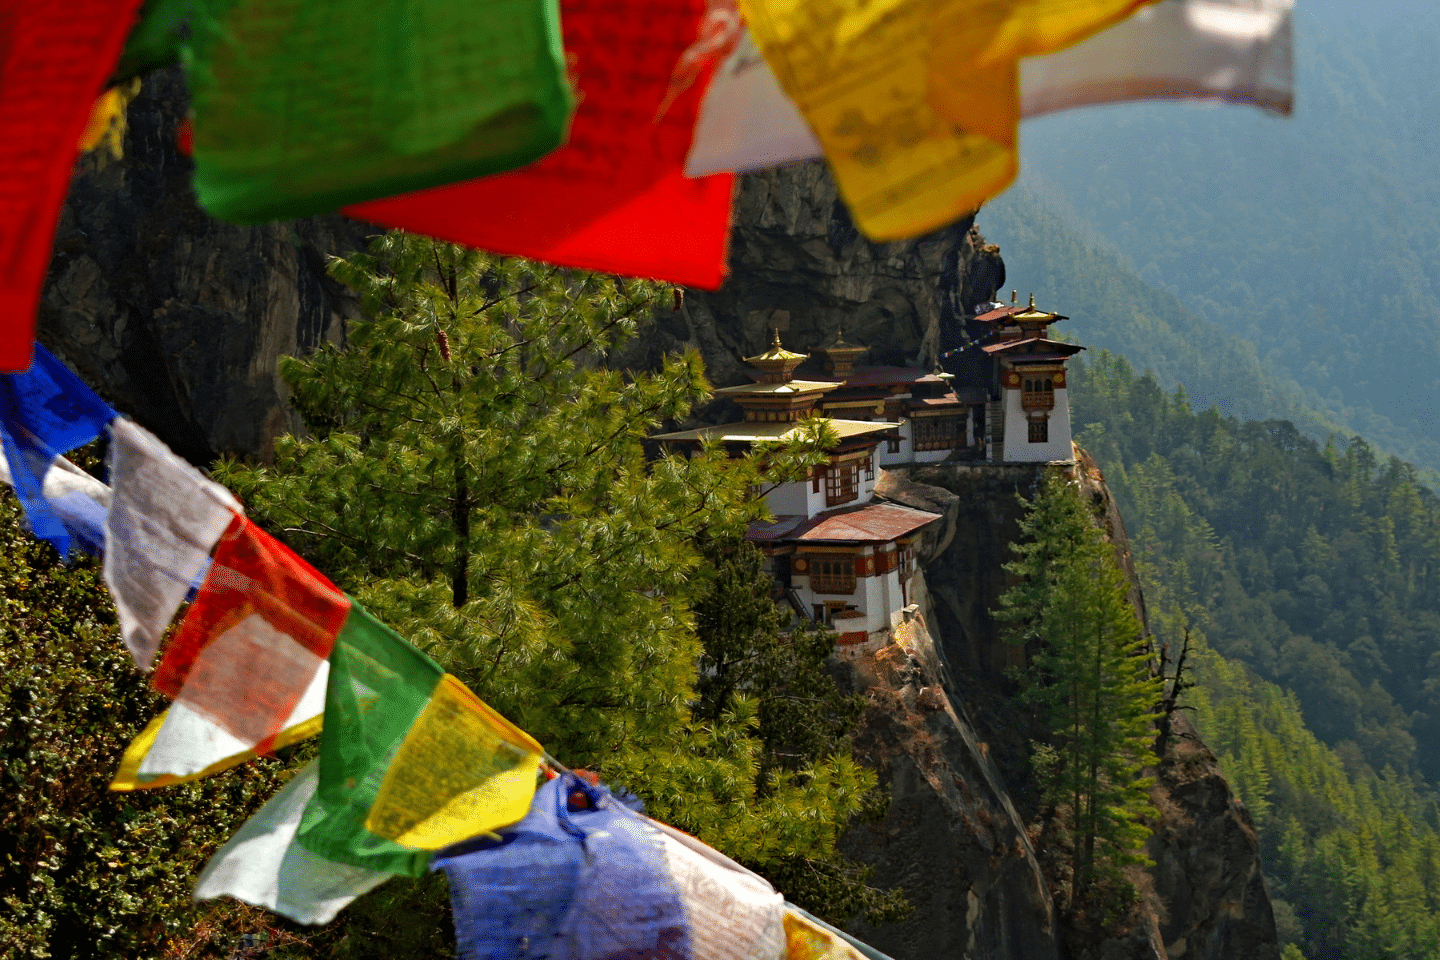 voyage bhoutan - meilleures destinations voyages noces asie